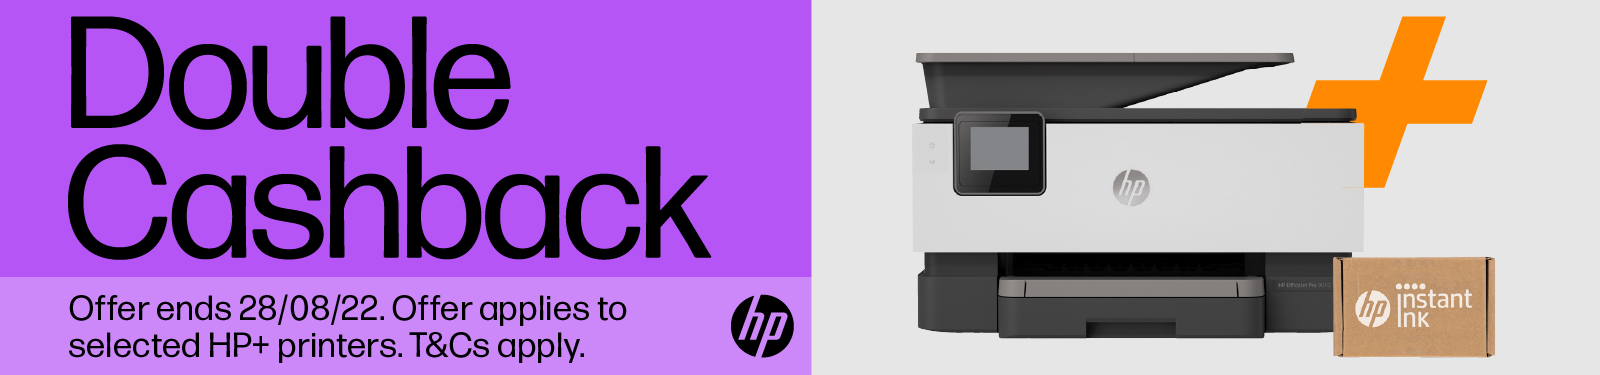 HP Printer Double Cashback at Retravision